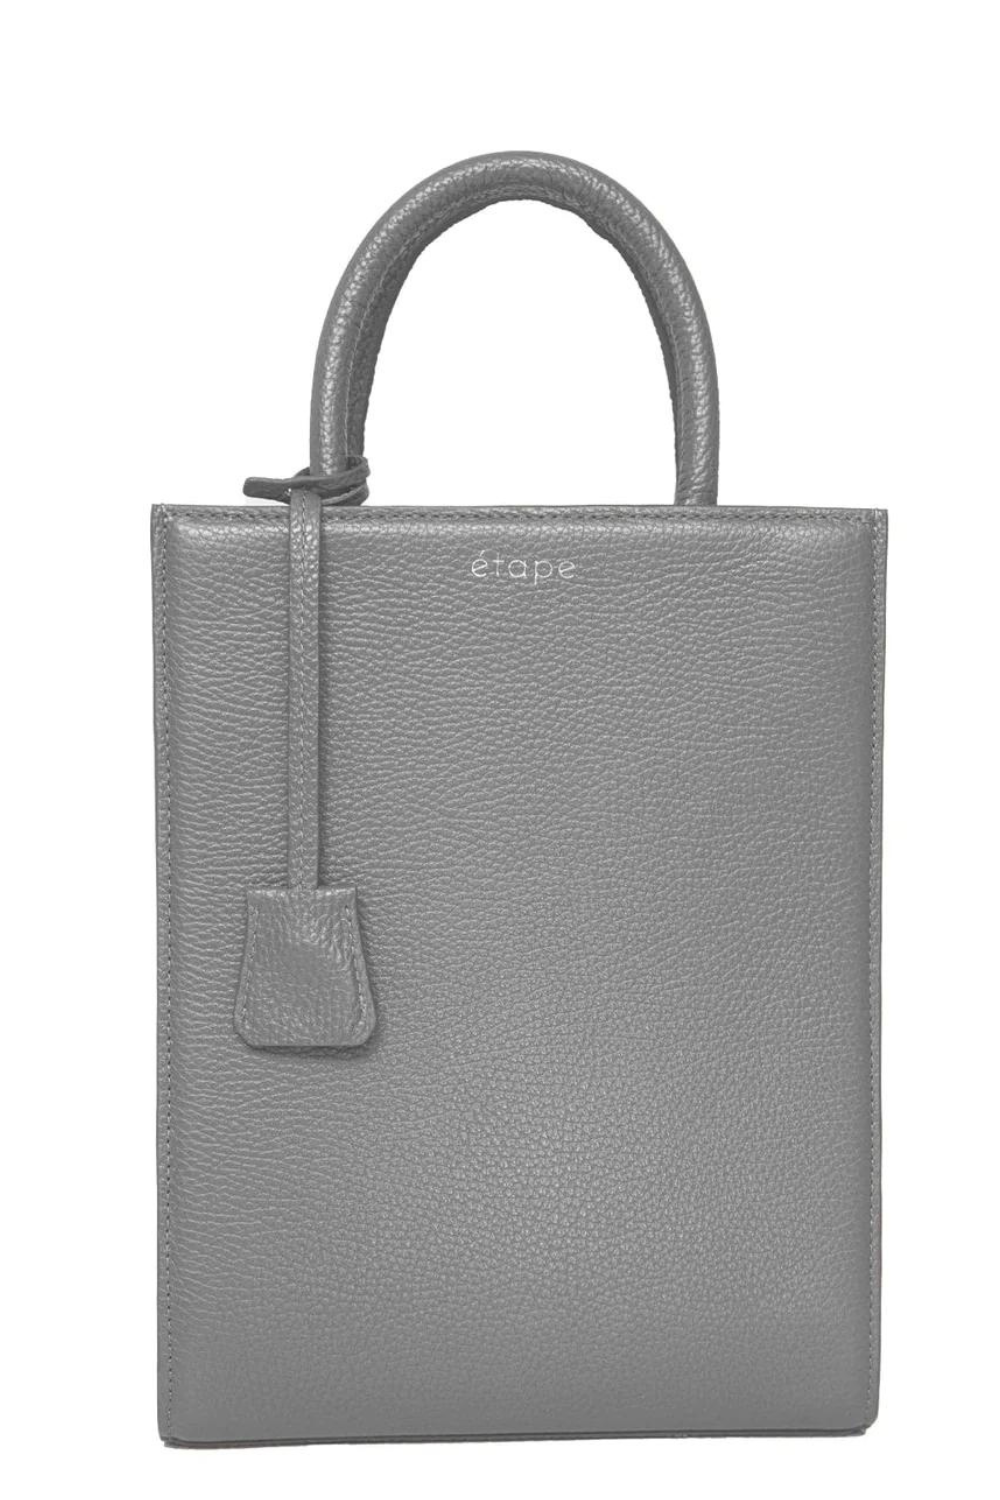 Dámská kabelka Tmavě šedá (ETAPE) TOY BAG 888 deep grey